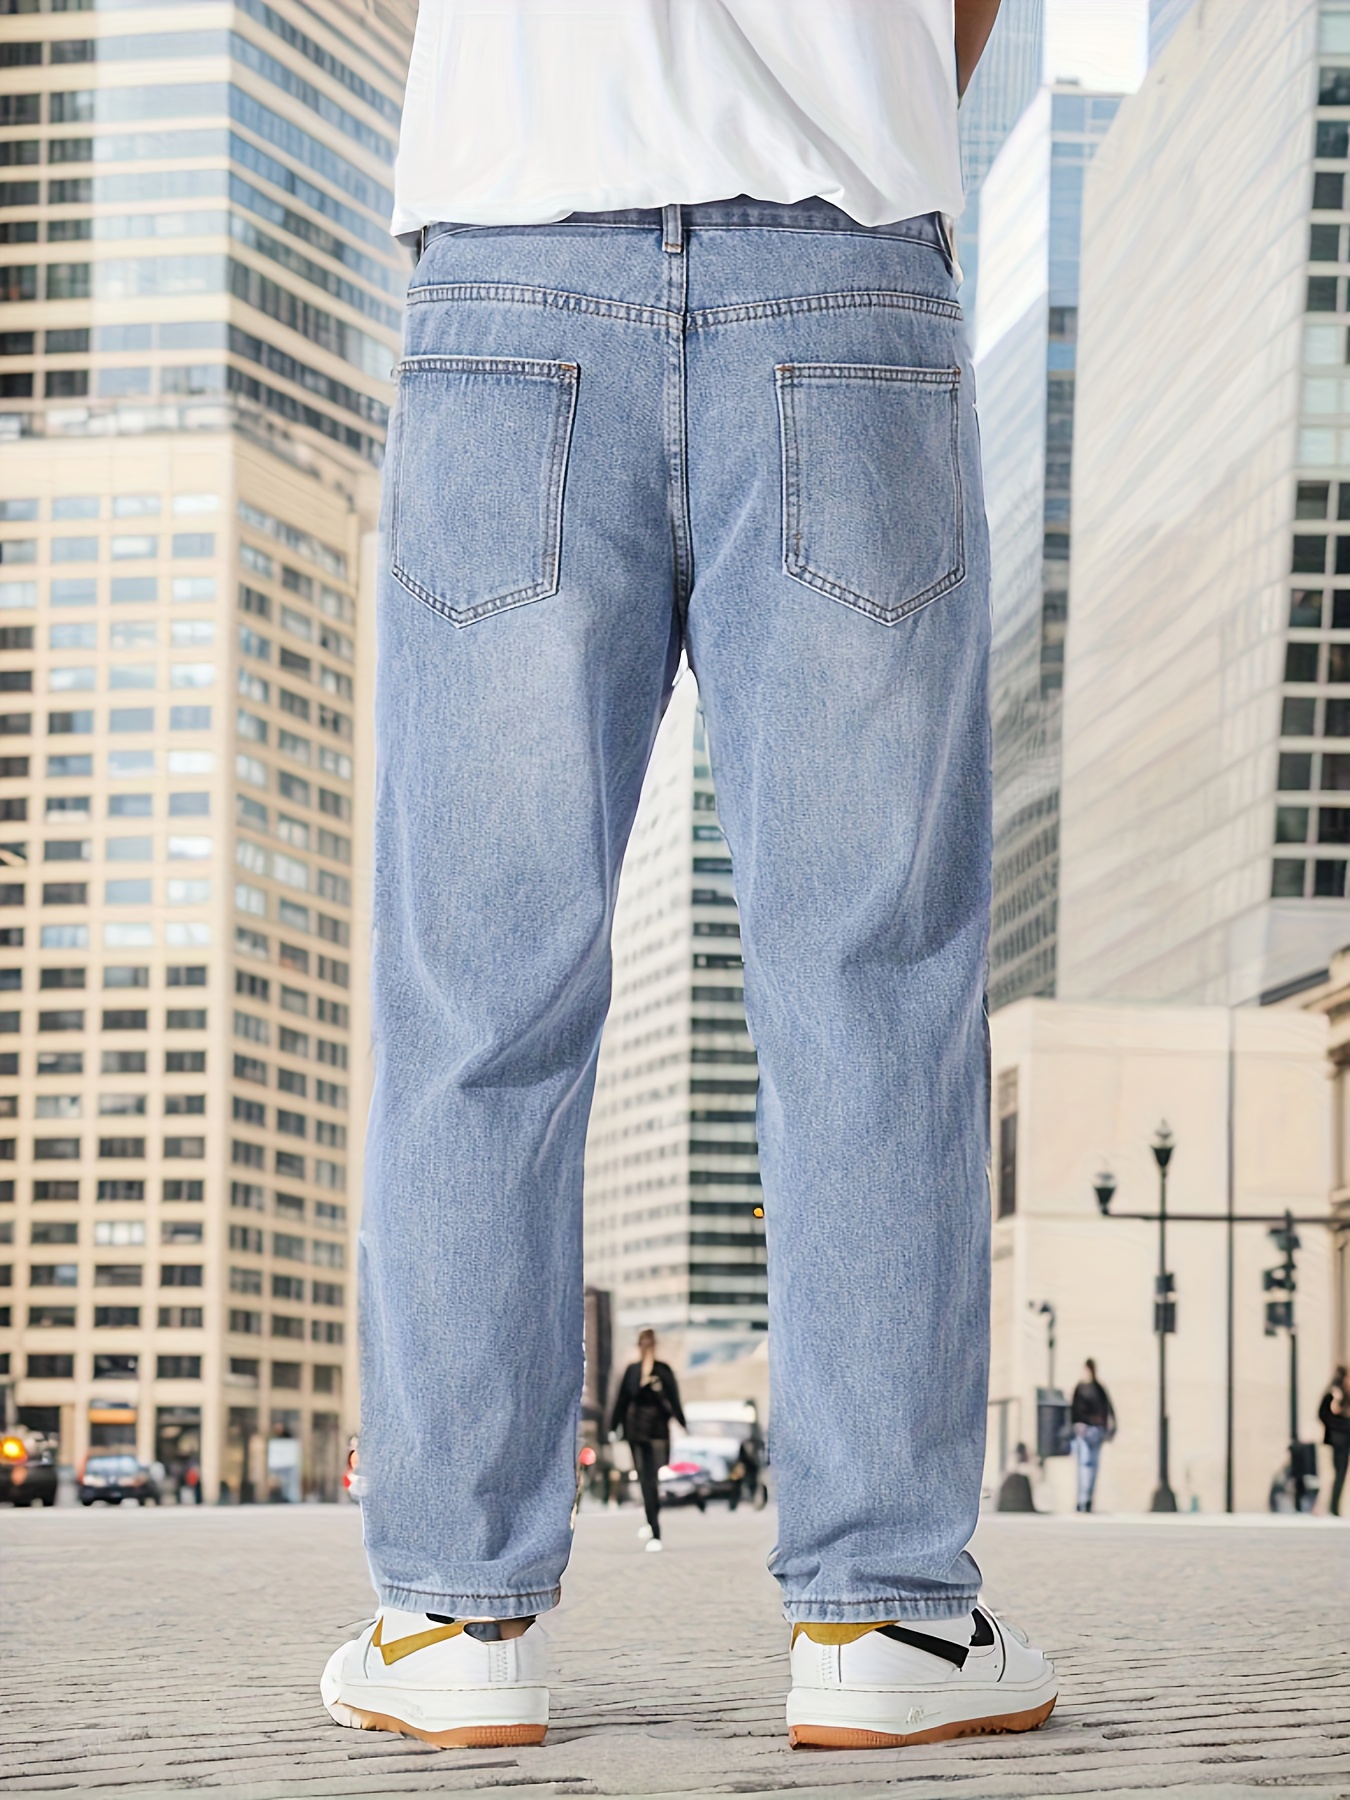 Wozhidaoke Mens Jeans Jeans for Men Leg Men'S Pants Plus-Size Street Jeans  Fashion Trousers Loose Wide Men'S Pants Baggy Jeans Black M 